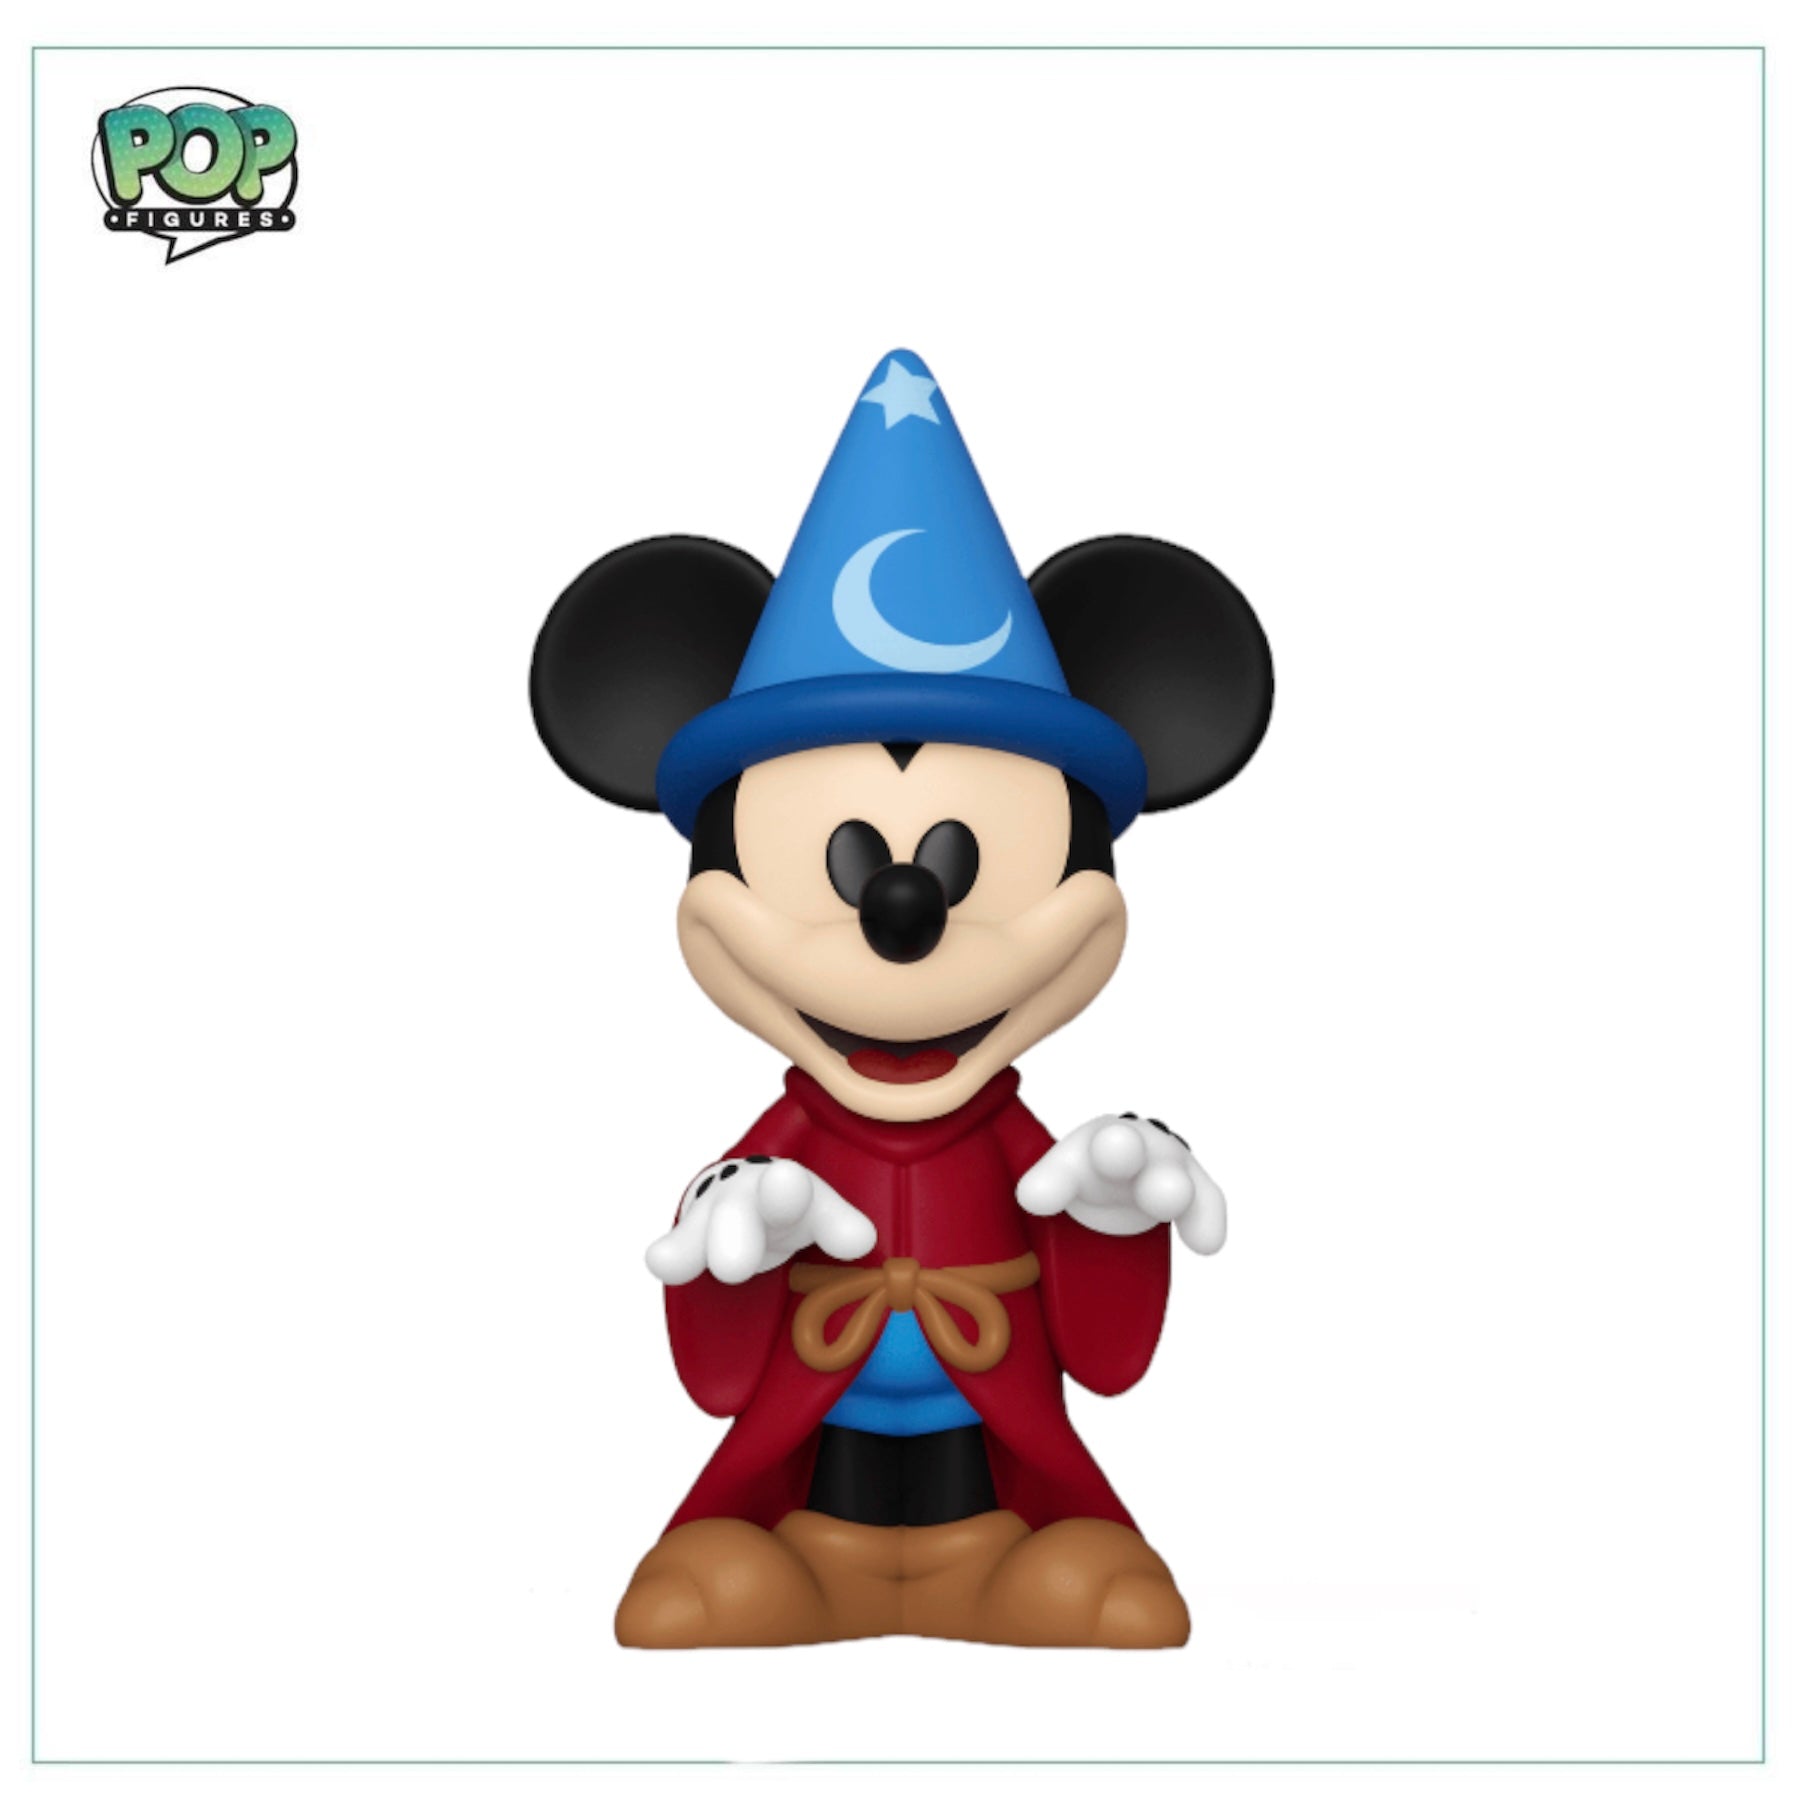 Sorcerer's Apprentice Mickey Funko Soda Vinyl Figure! - Disney Fantasia - LE15000 Pcs - Chance Of Chance